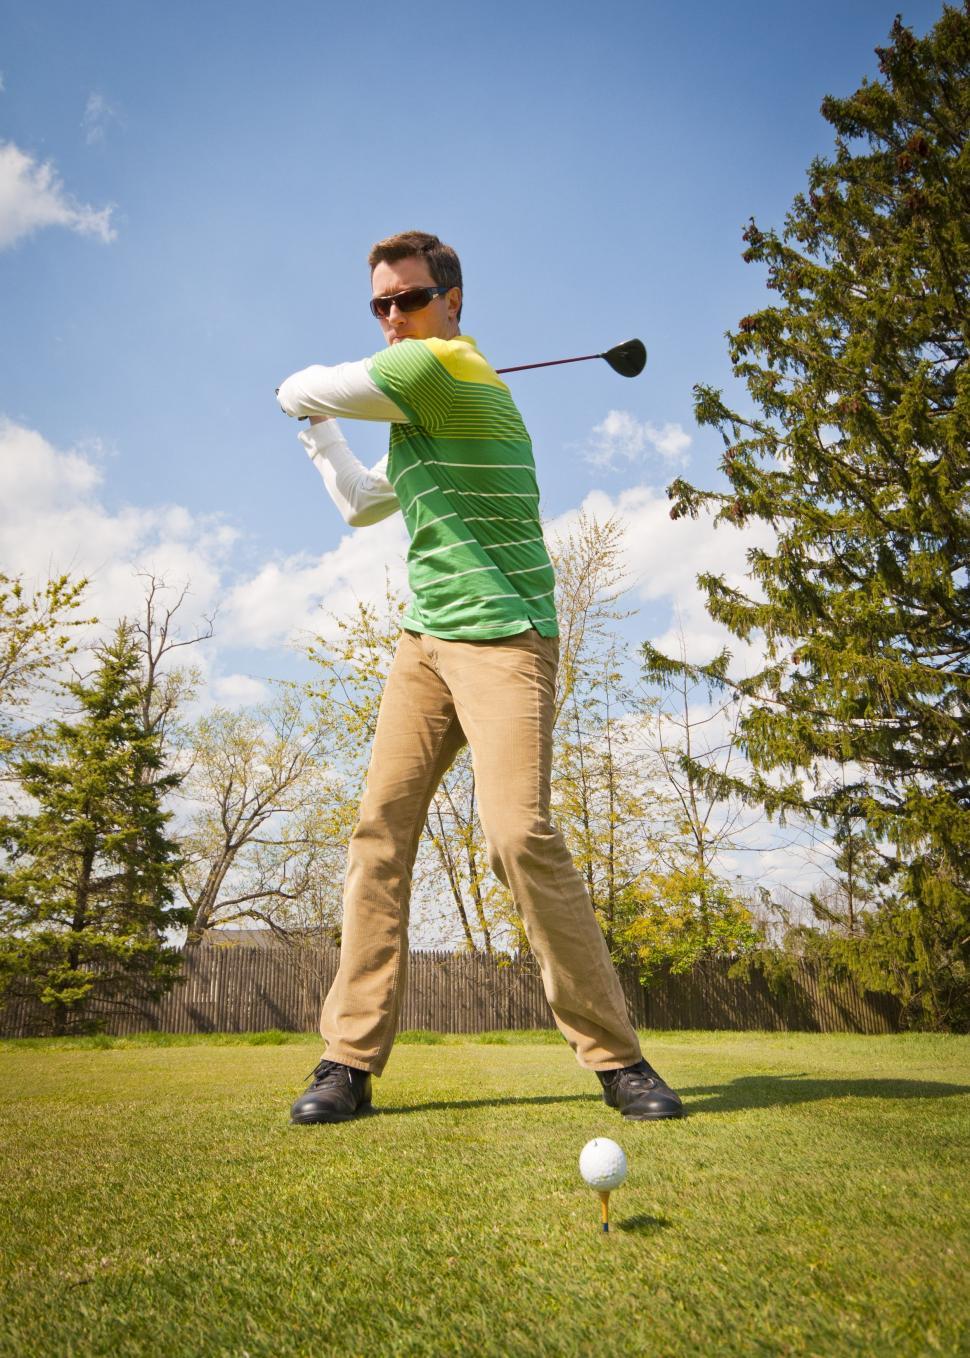 Free Image of Male Golfer Taking a Shot  